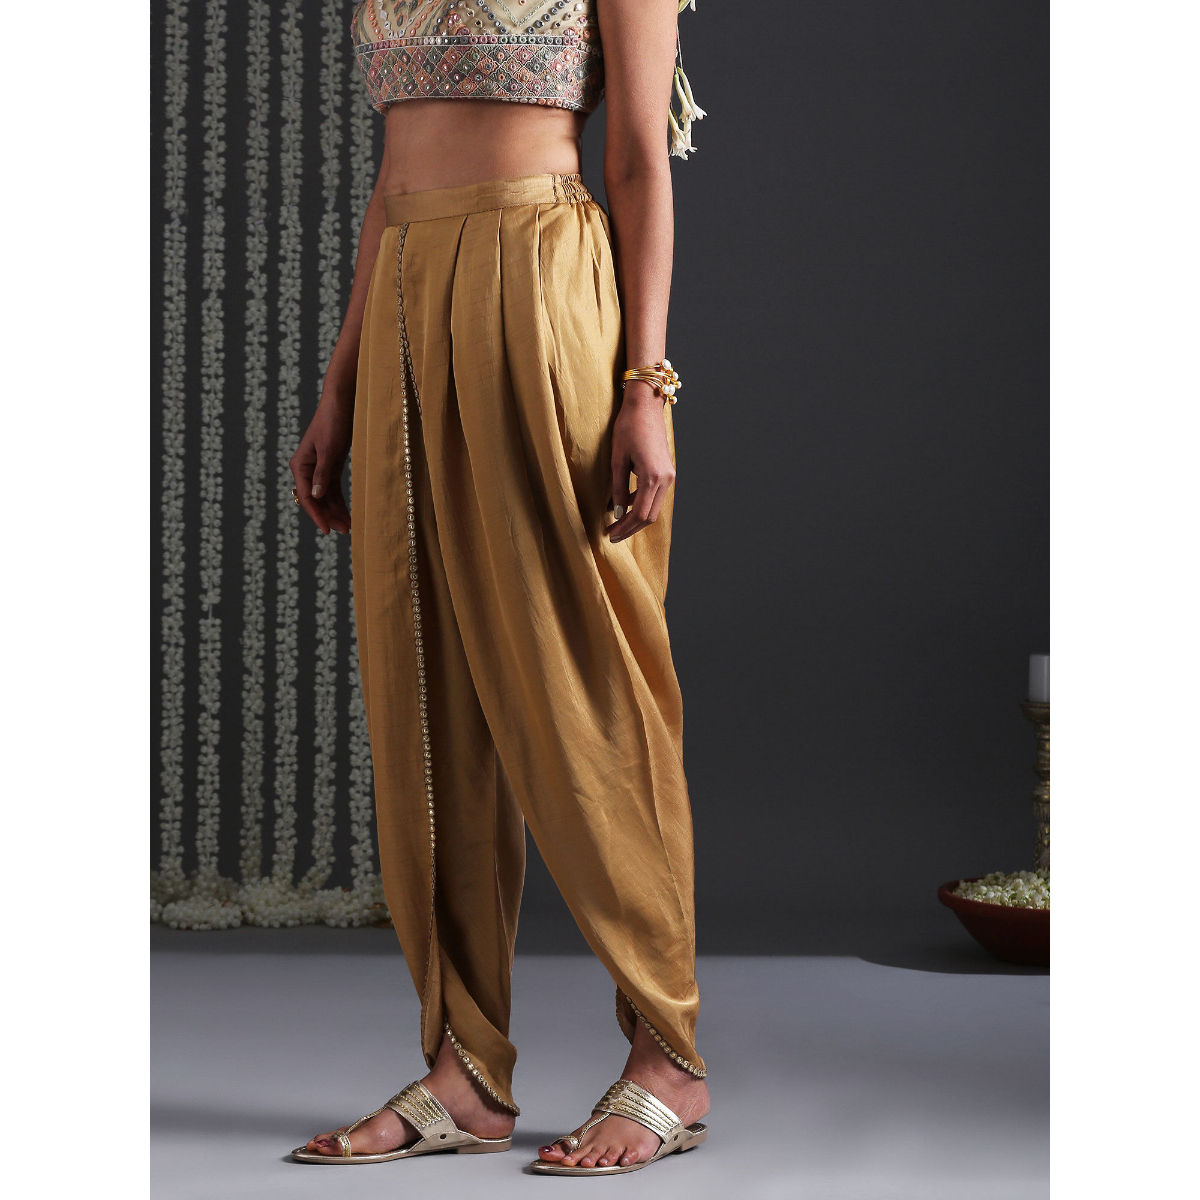 Buy Go Colors Golden Regular Fit Dhoti Pants for Women Online  Tata CLiQ